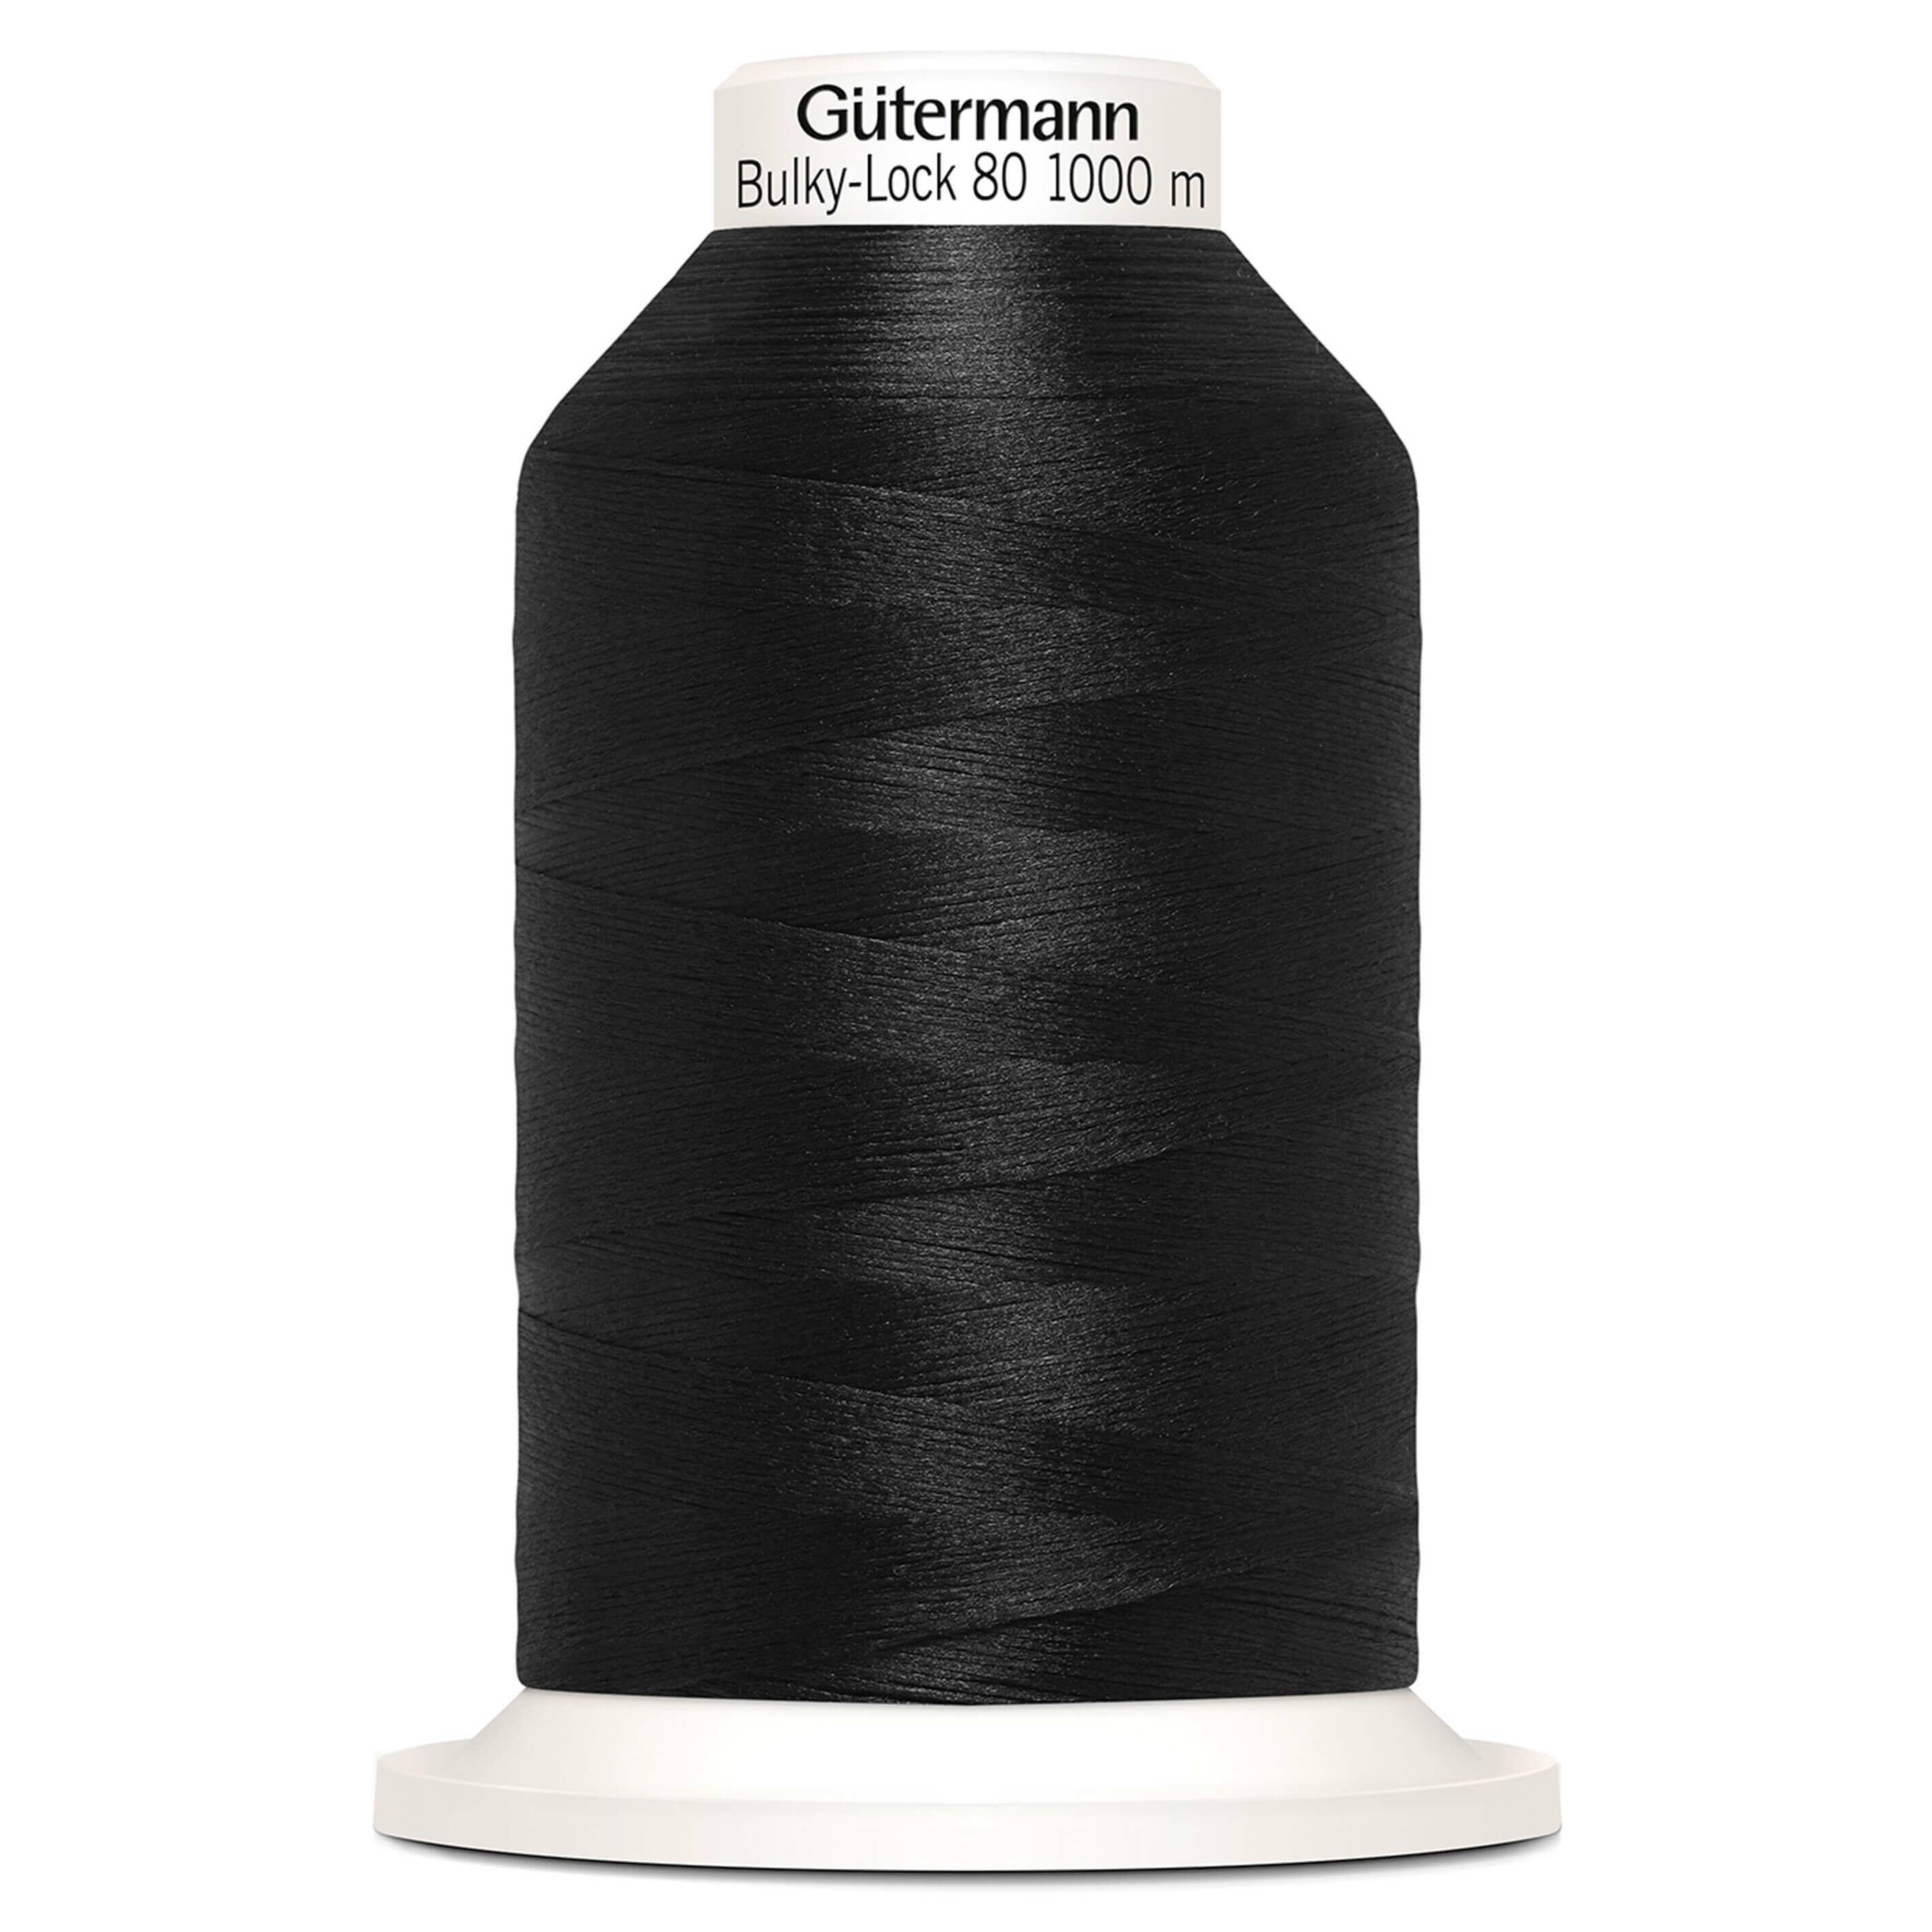 Gutermann Bulky Lock 80 overlocking thread in colour 000 Black